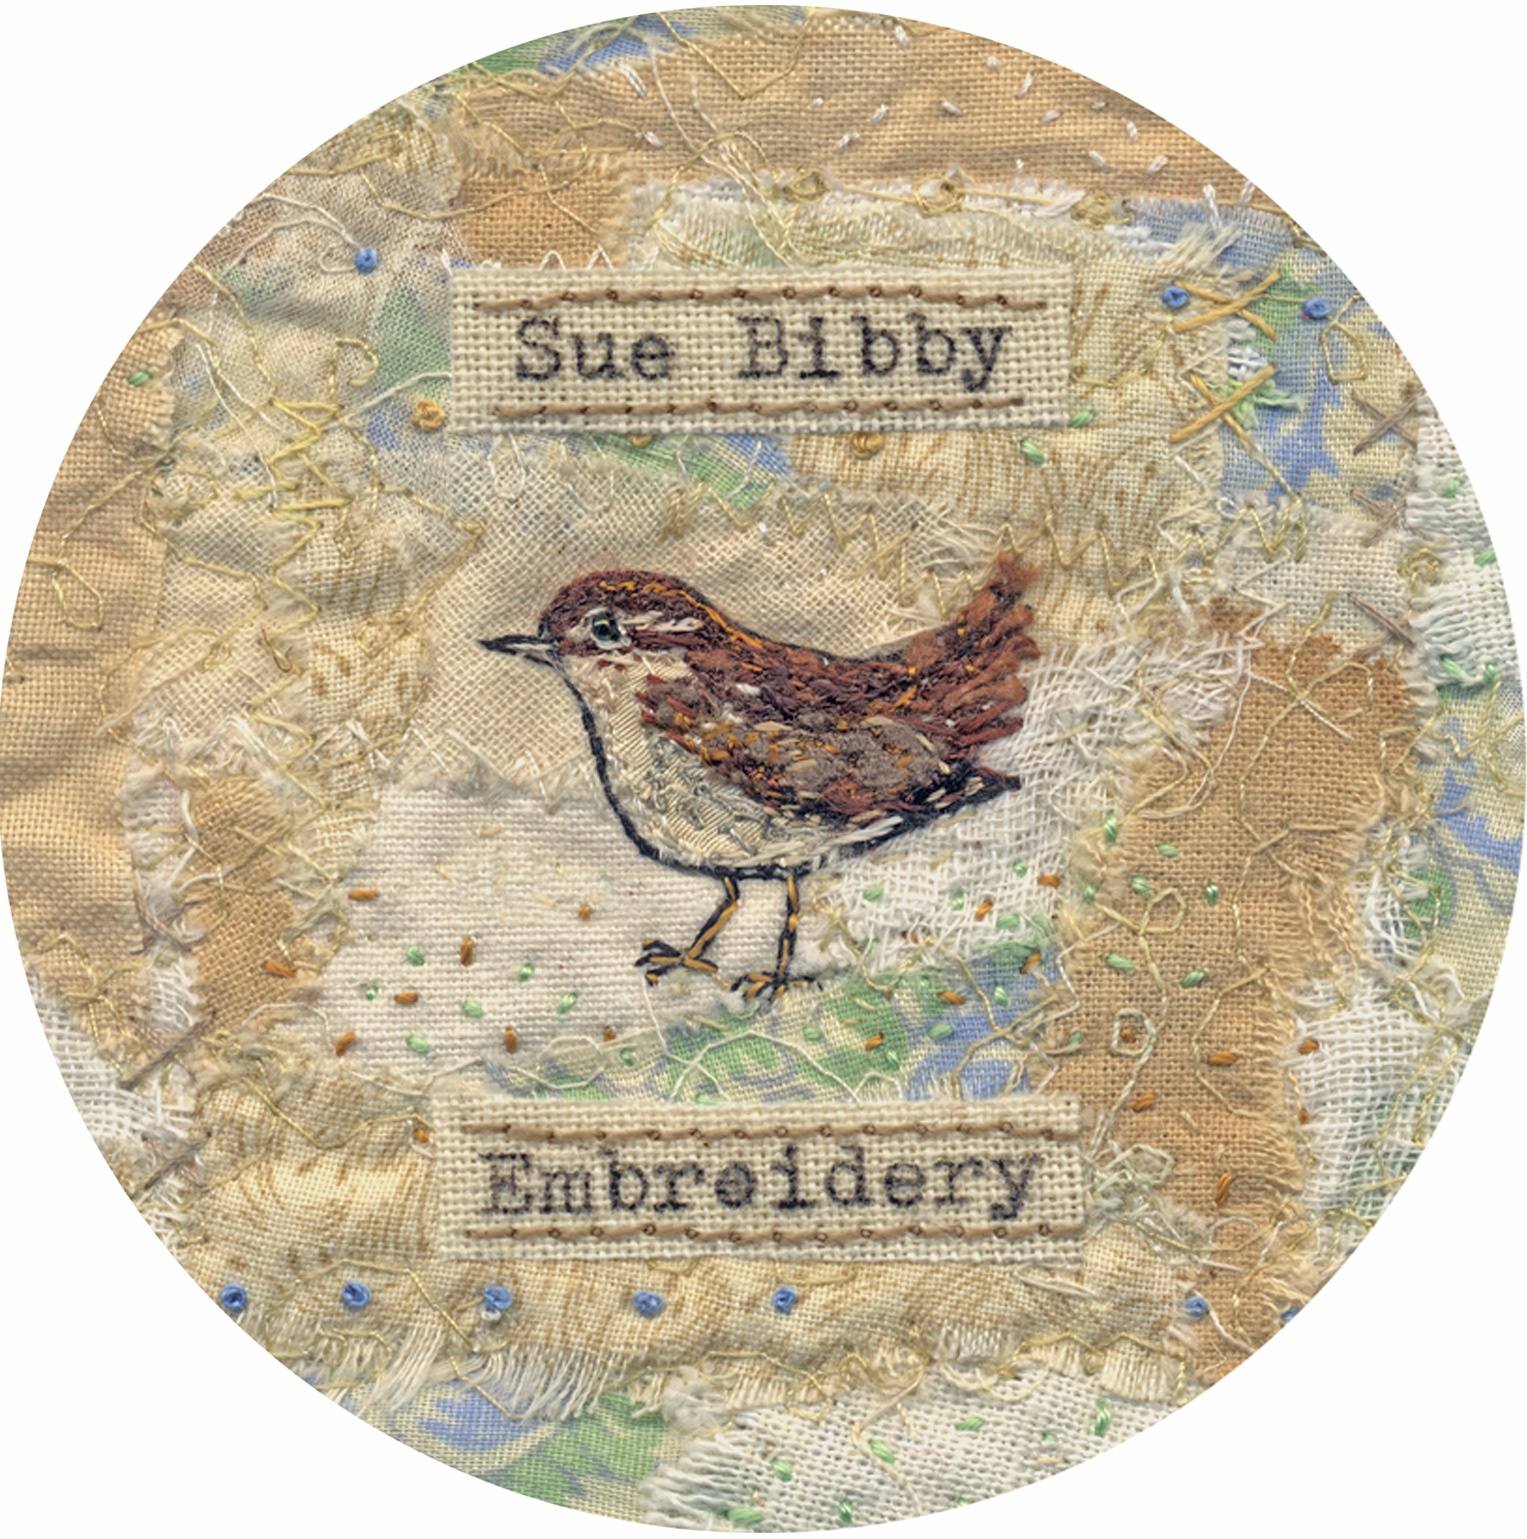 Sue Bibby Embroidery